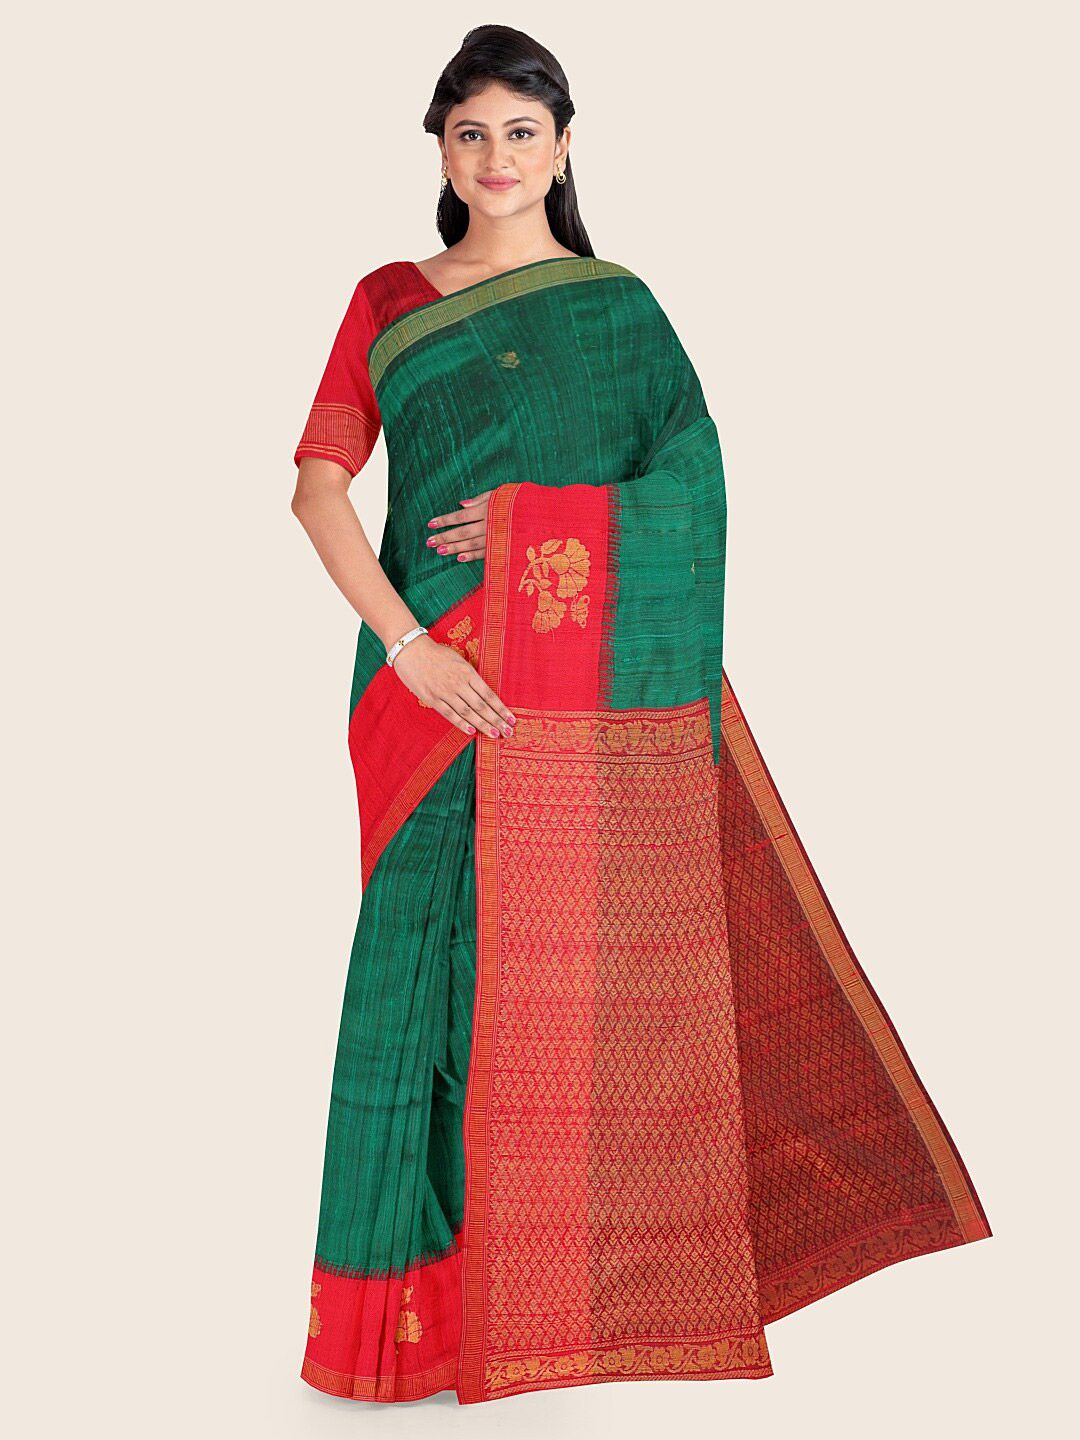 Pothys Green & Red Ethnic Motifs Jute Silk Saree Price in India